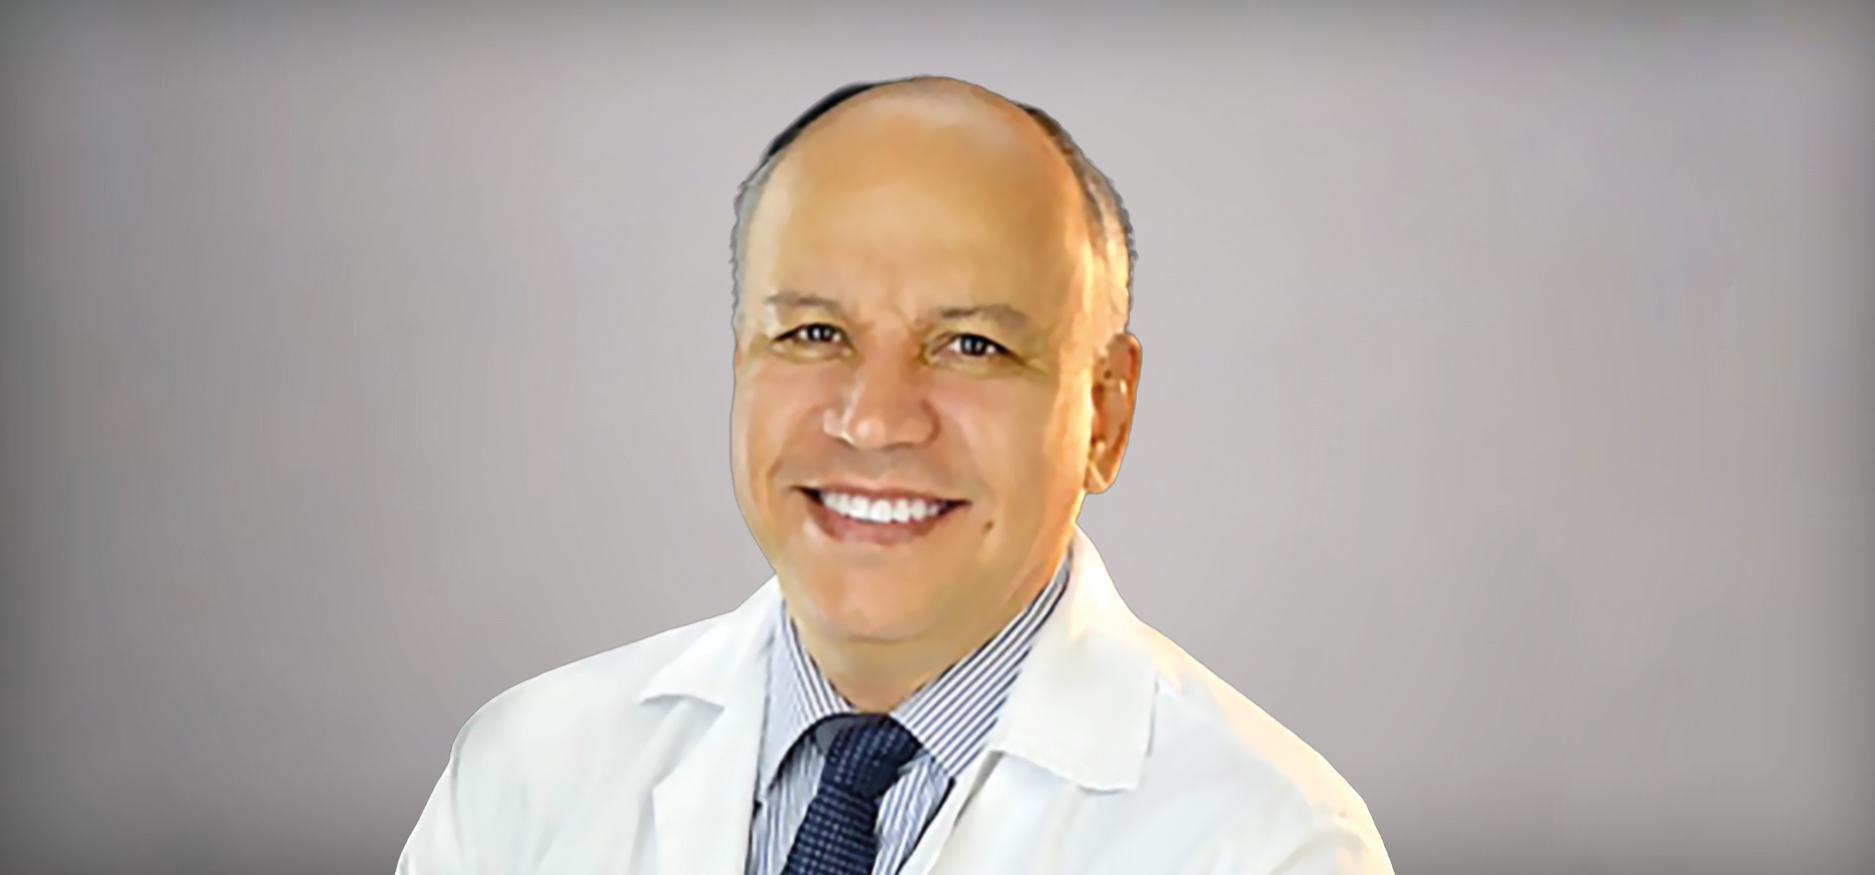 Dr. Germán Antonio Rengifo Alvis, M.D.